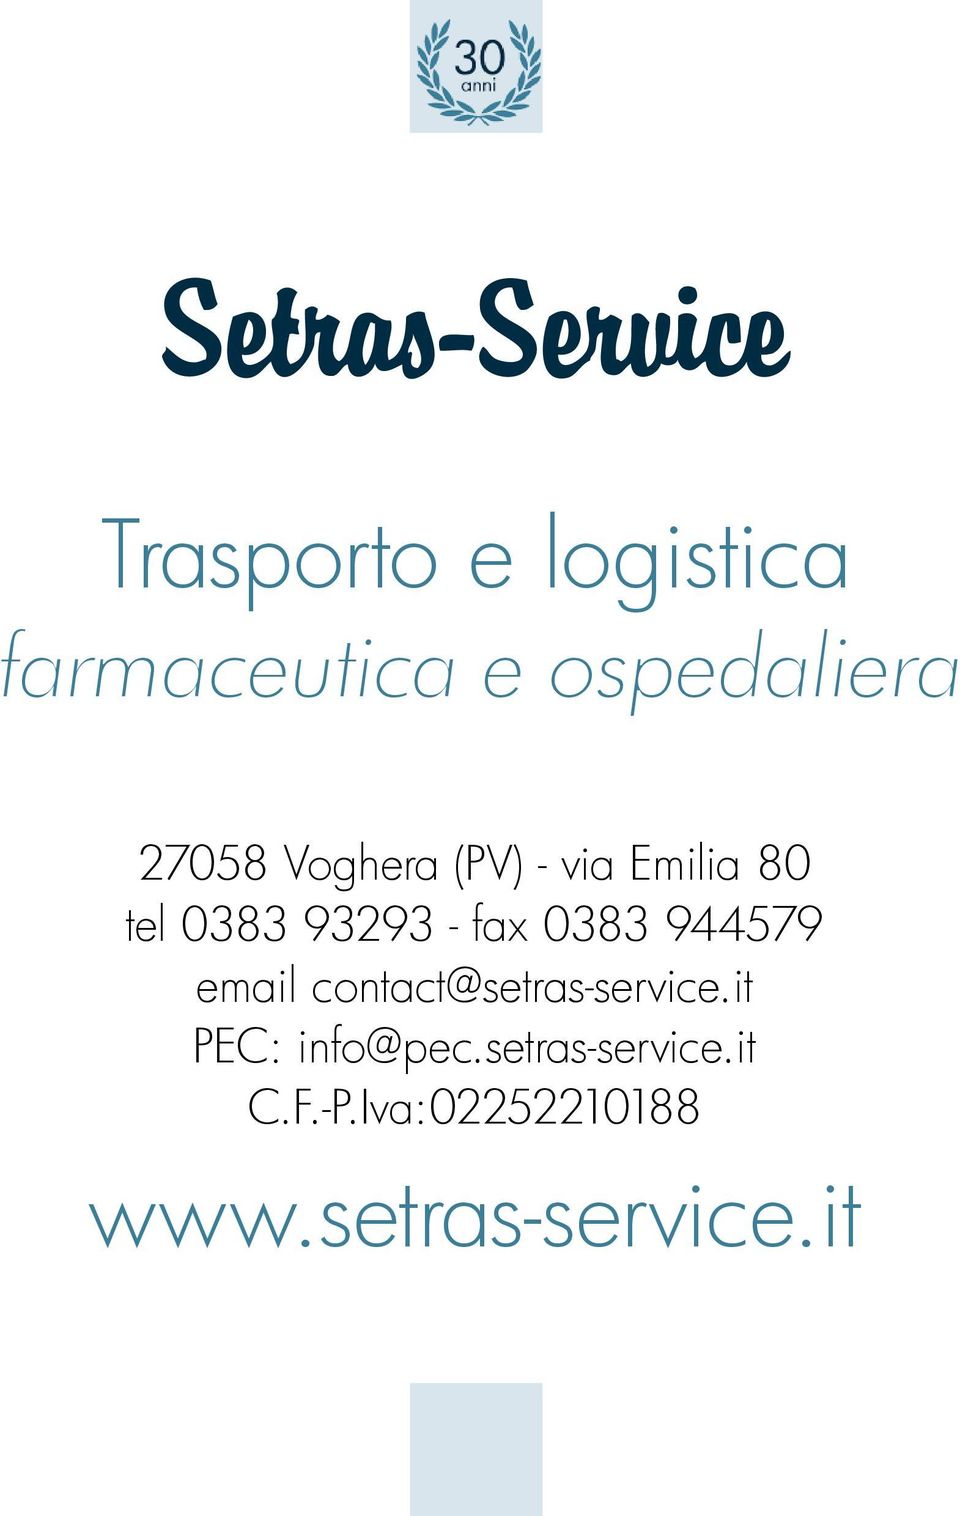 944579 email contact@setras-service.it PEC: info@pec.